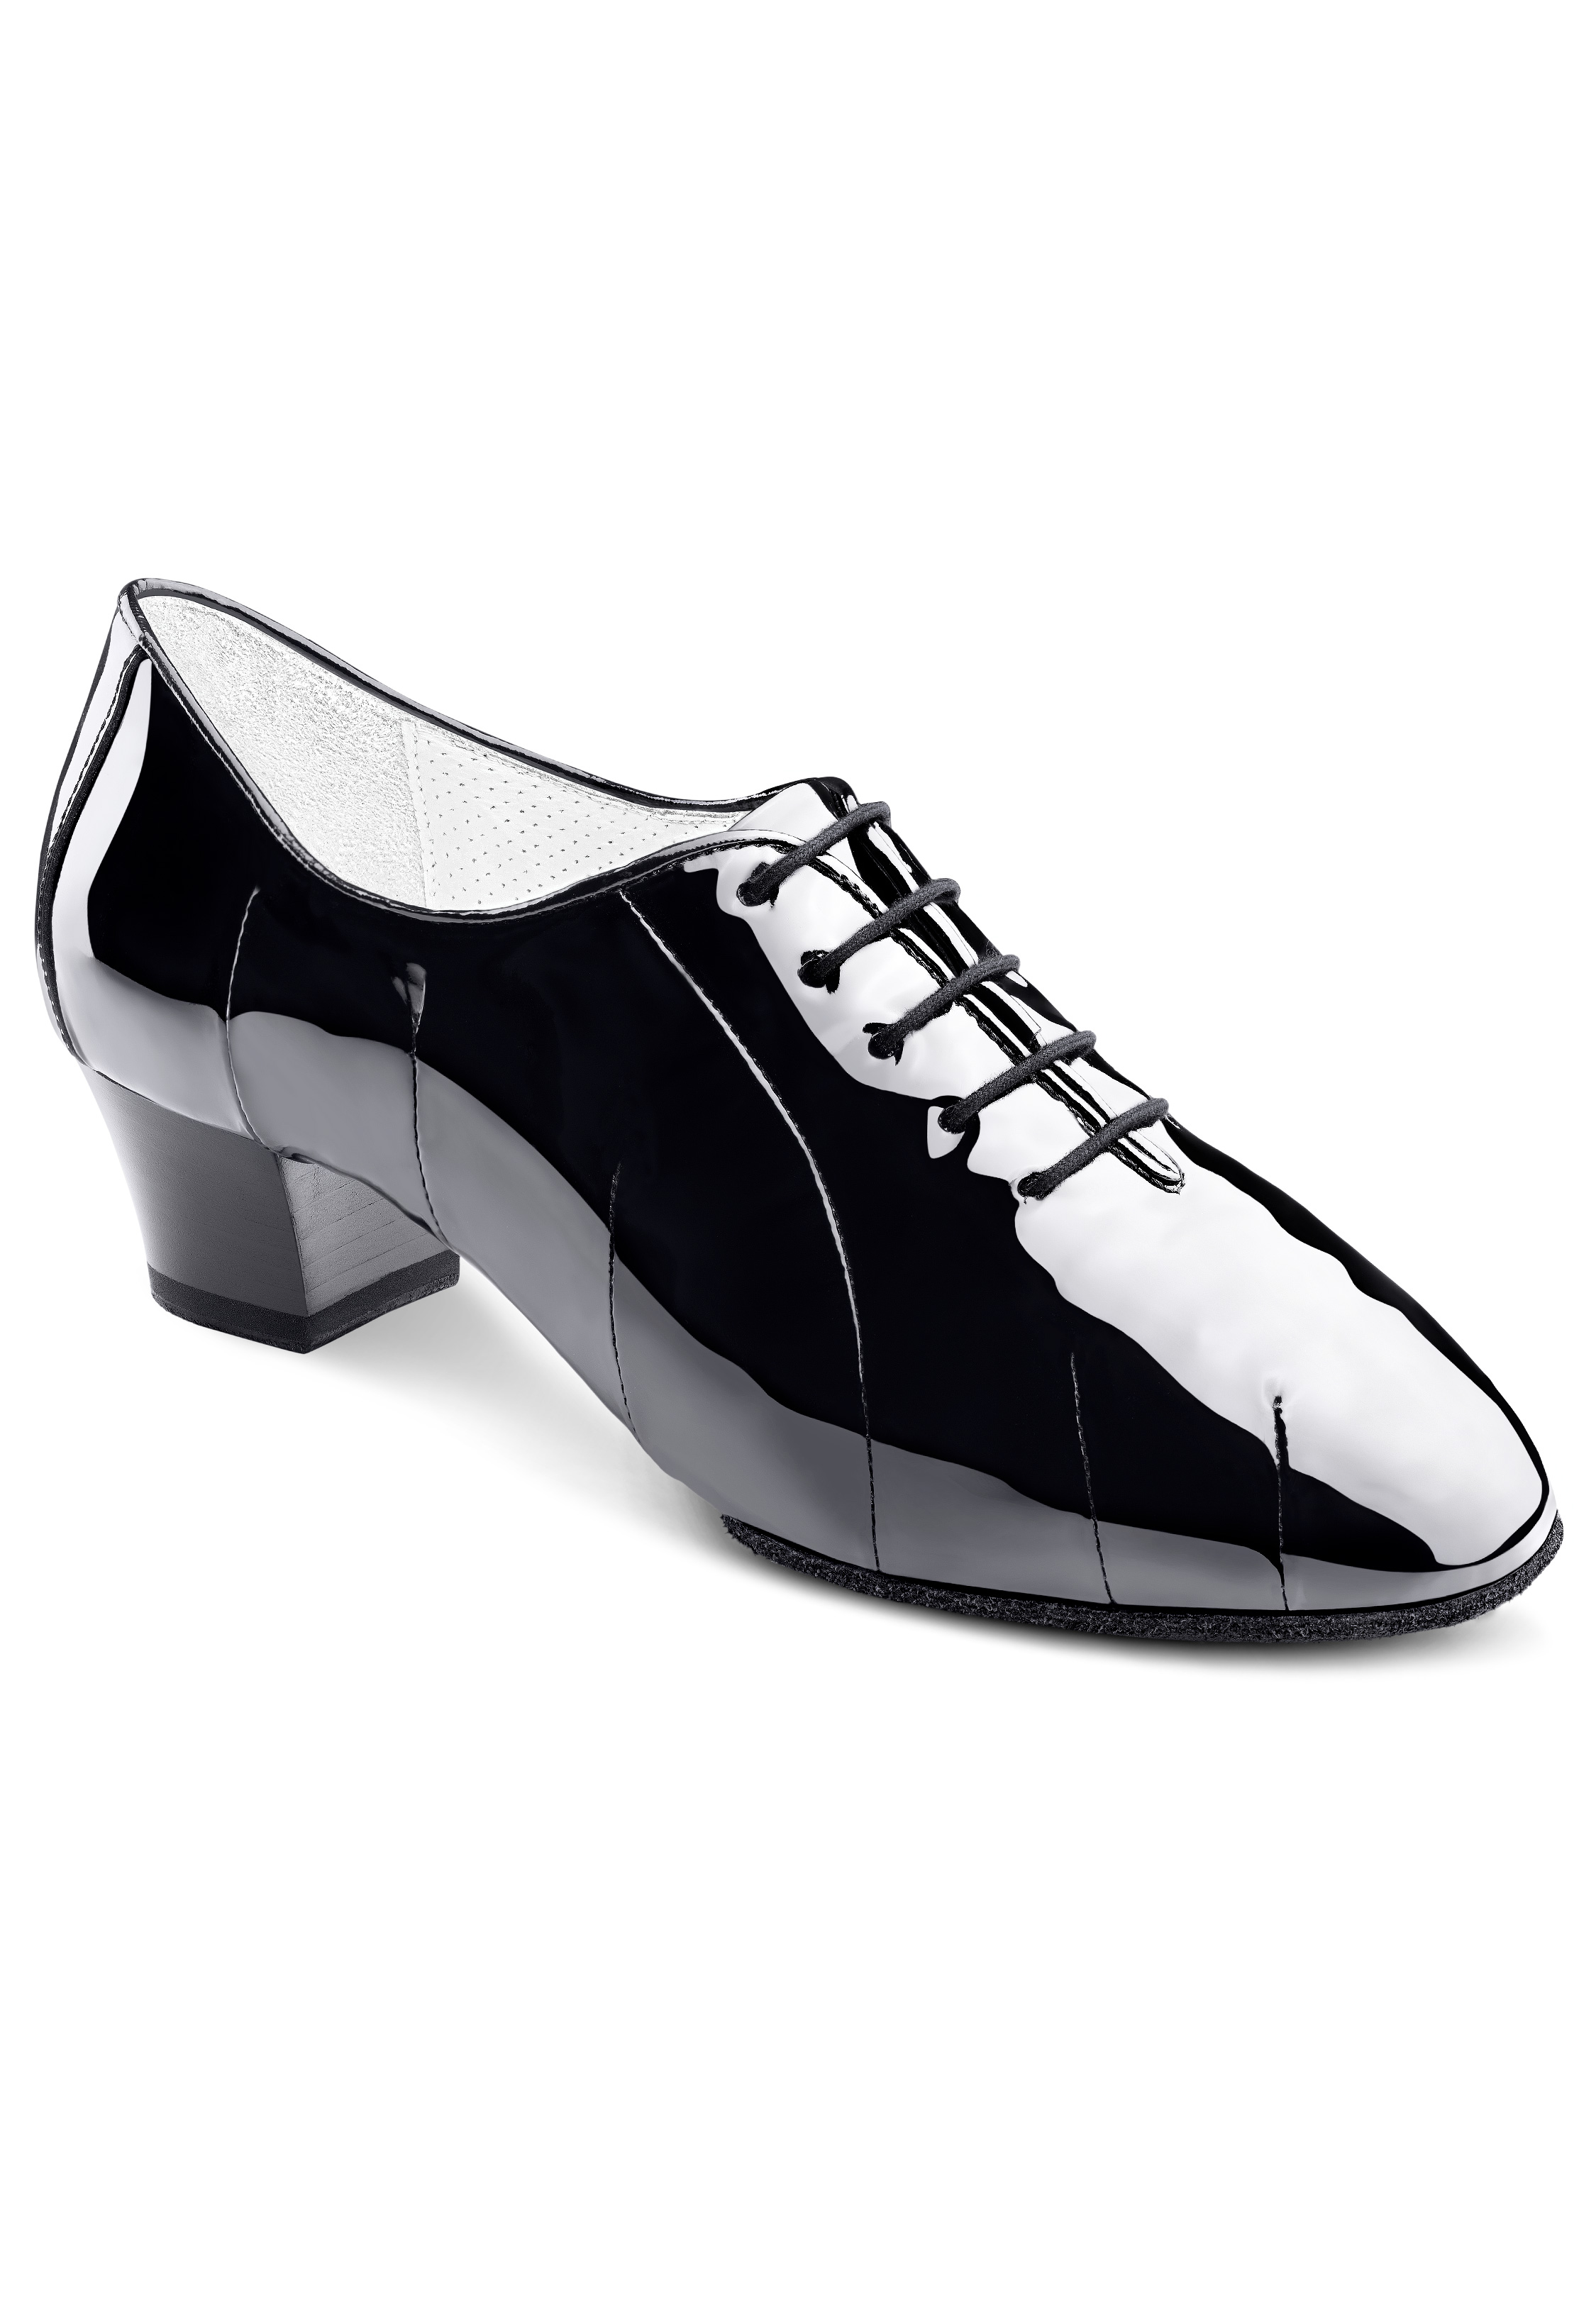 Miyoopark Mens Fashion Leather Latin Ballroom Dance Shoes MY-L173 